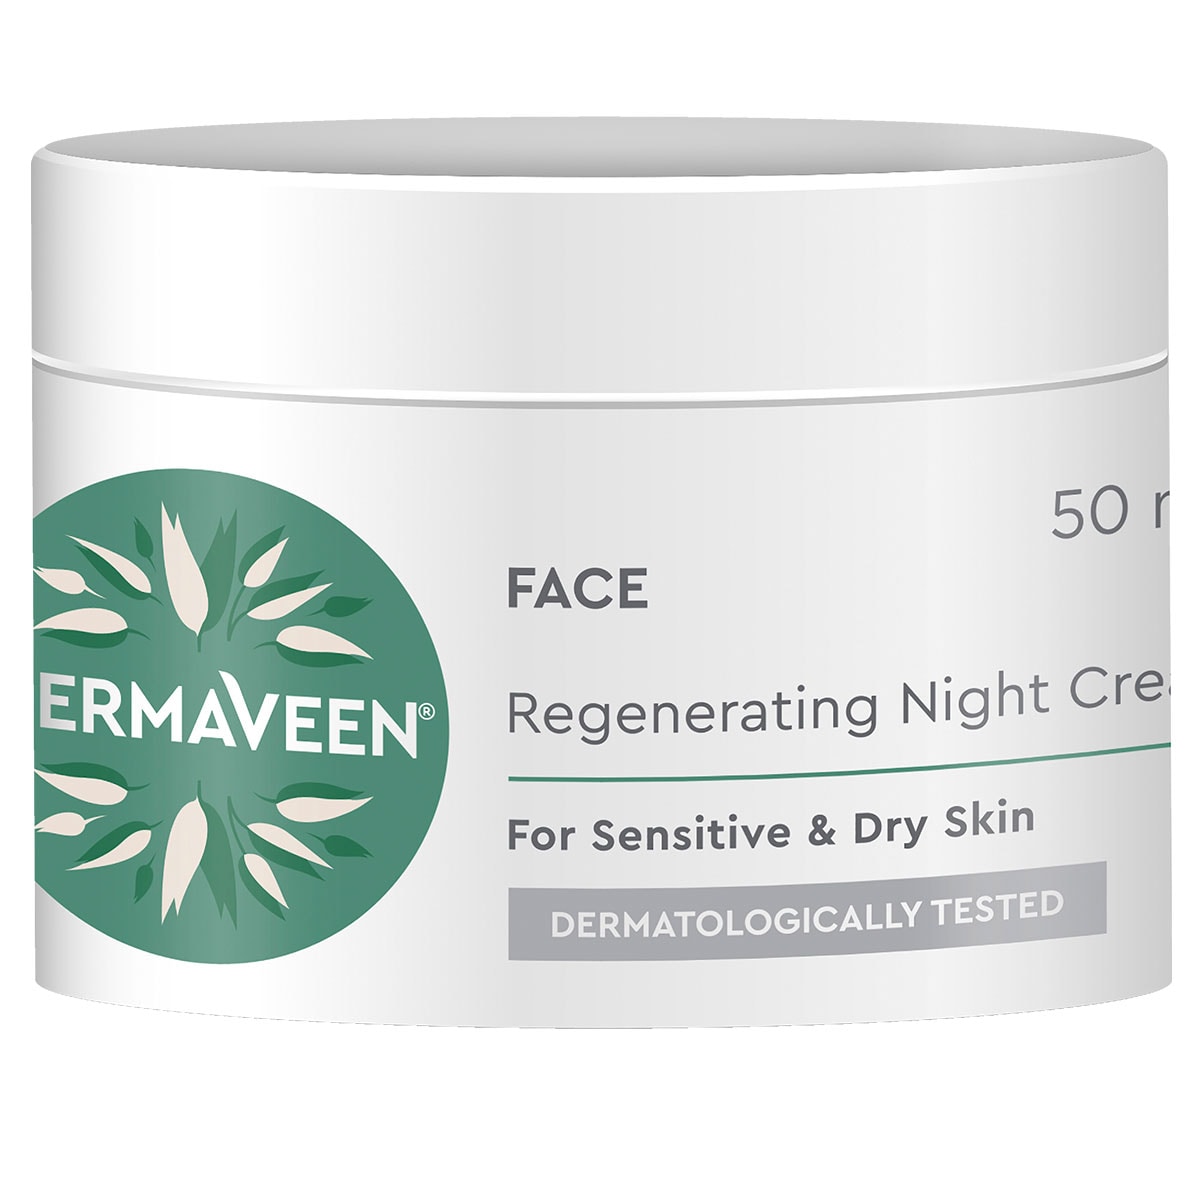 DermaVeen Regenerating Night Cream 50ml